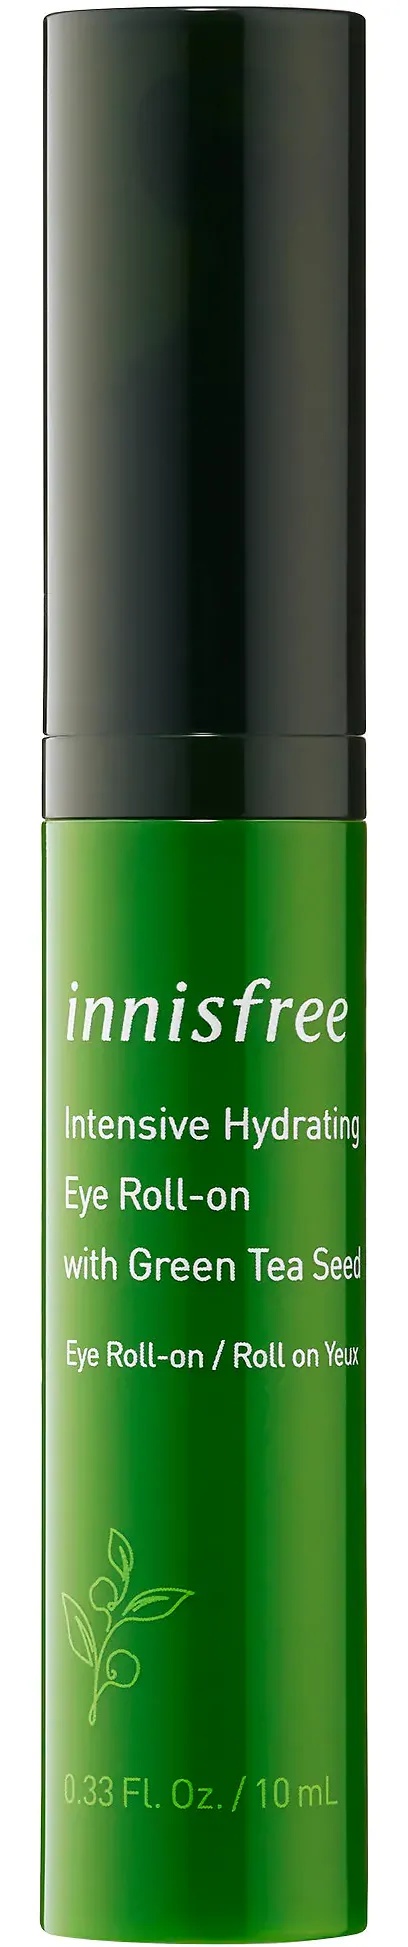 innisfree (Green Tea Seed) Intensive Hydrating Roll-On Eye Serum